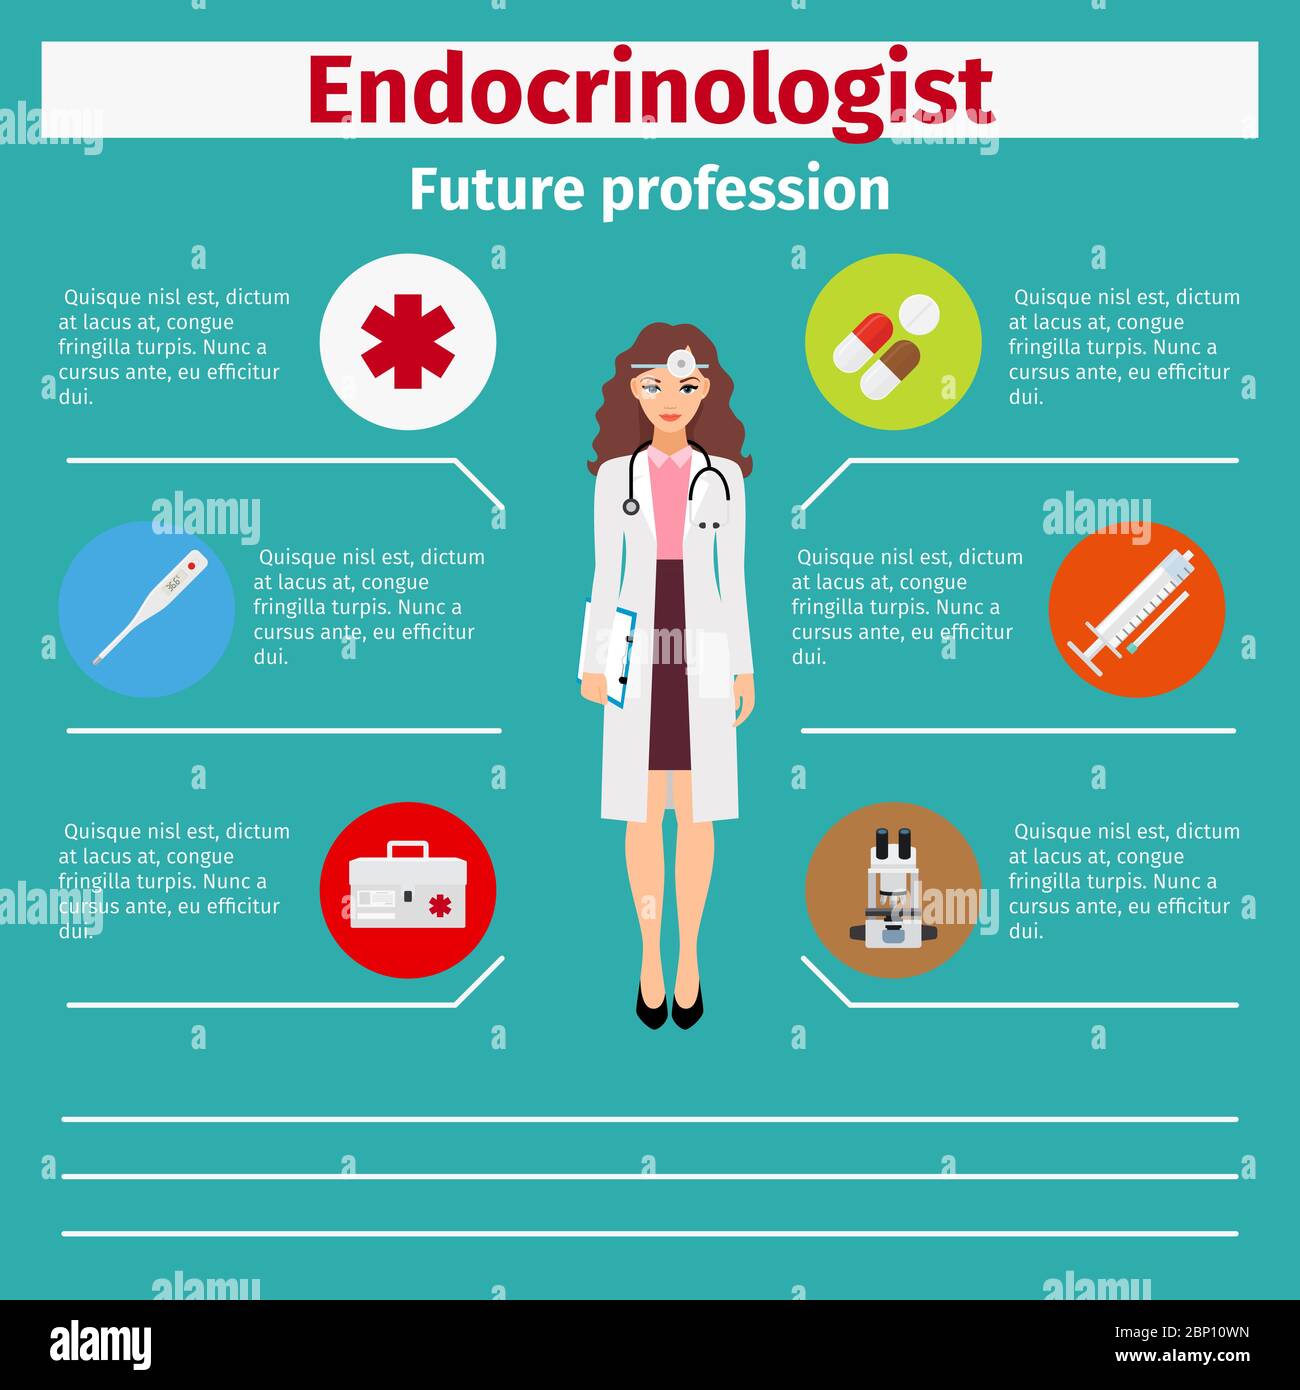 Best Endocrinologist In Austin